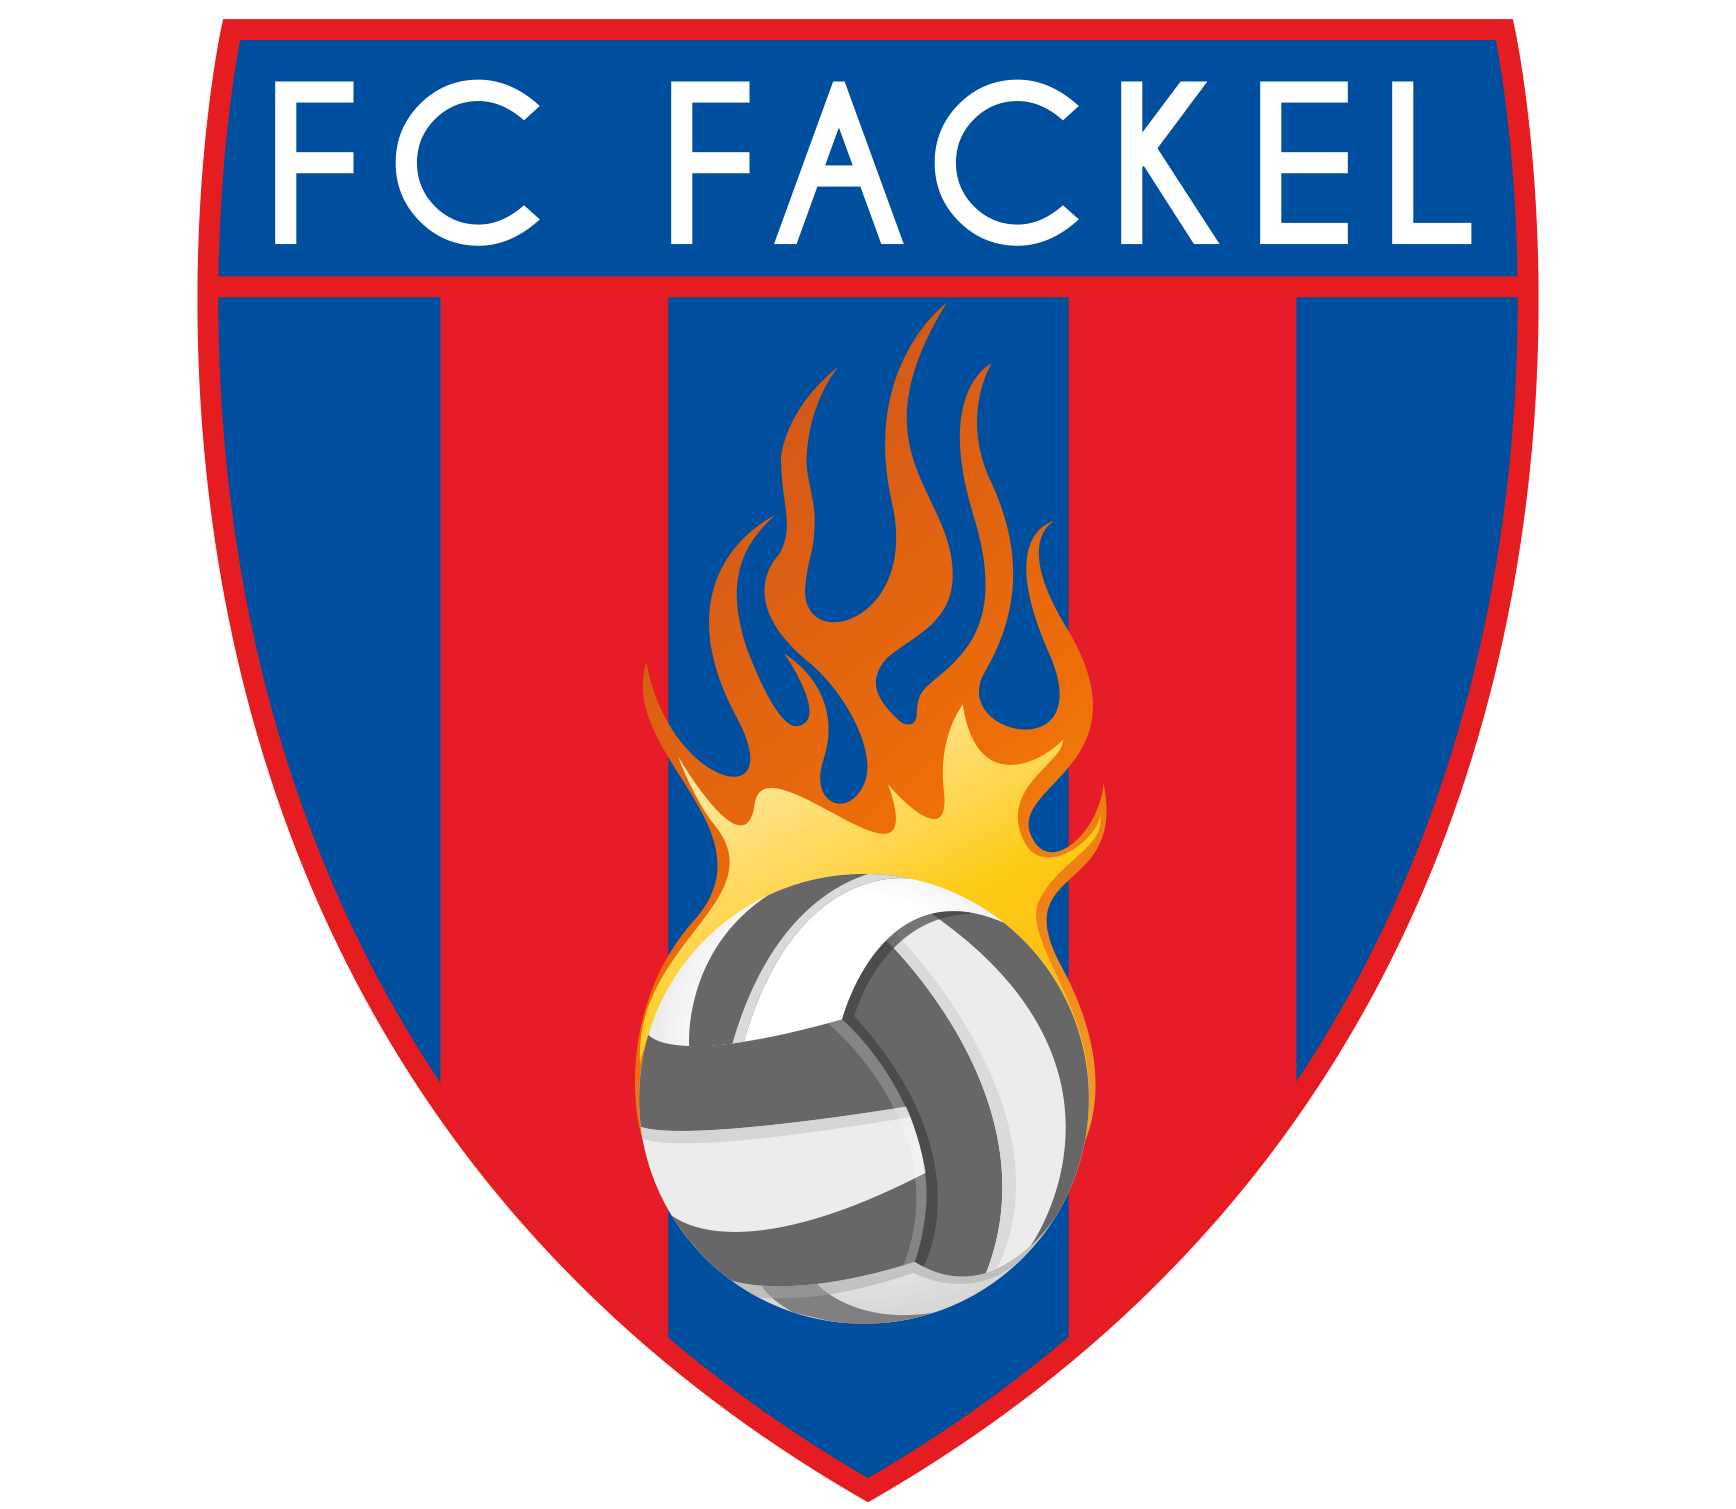 fcfackel logo volleyball